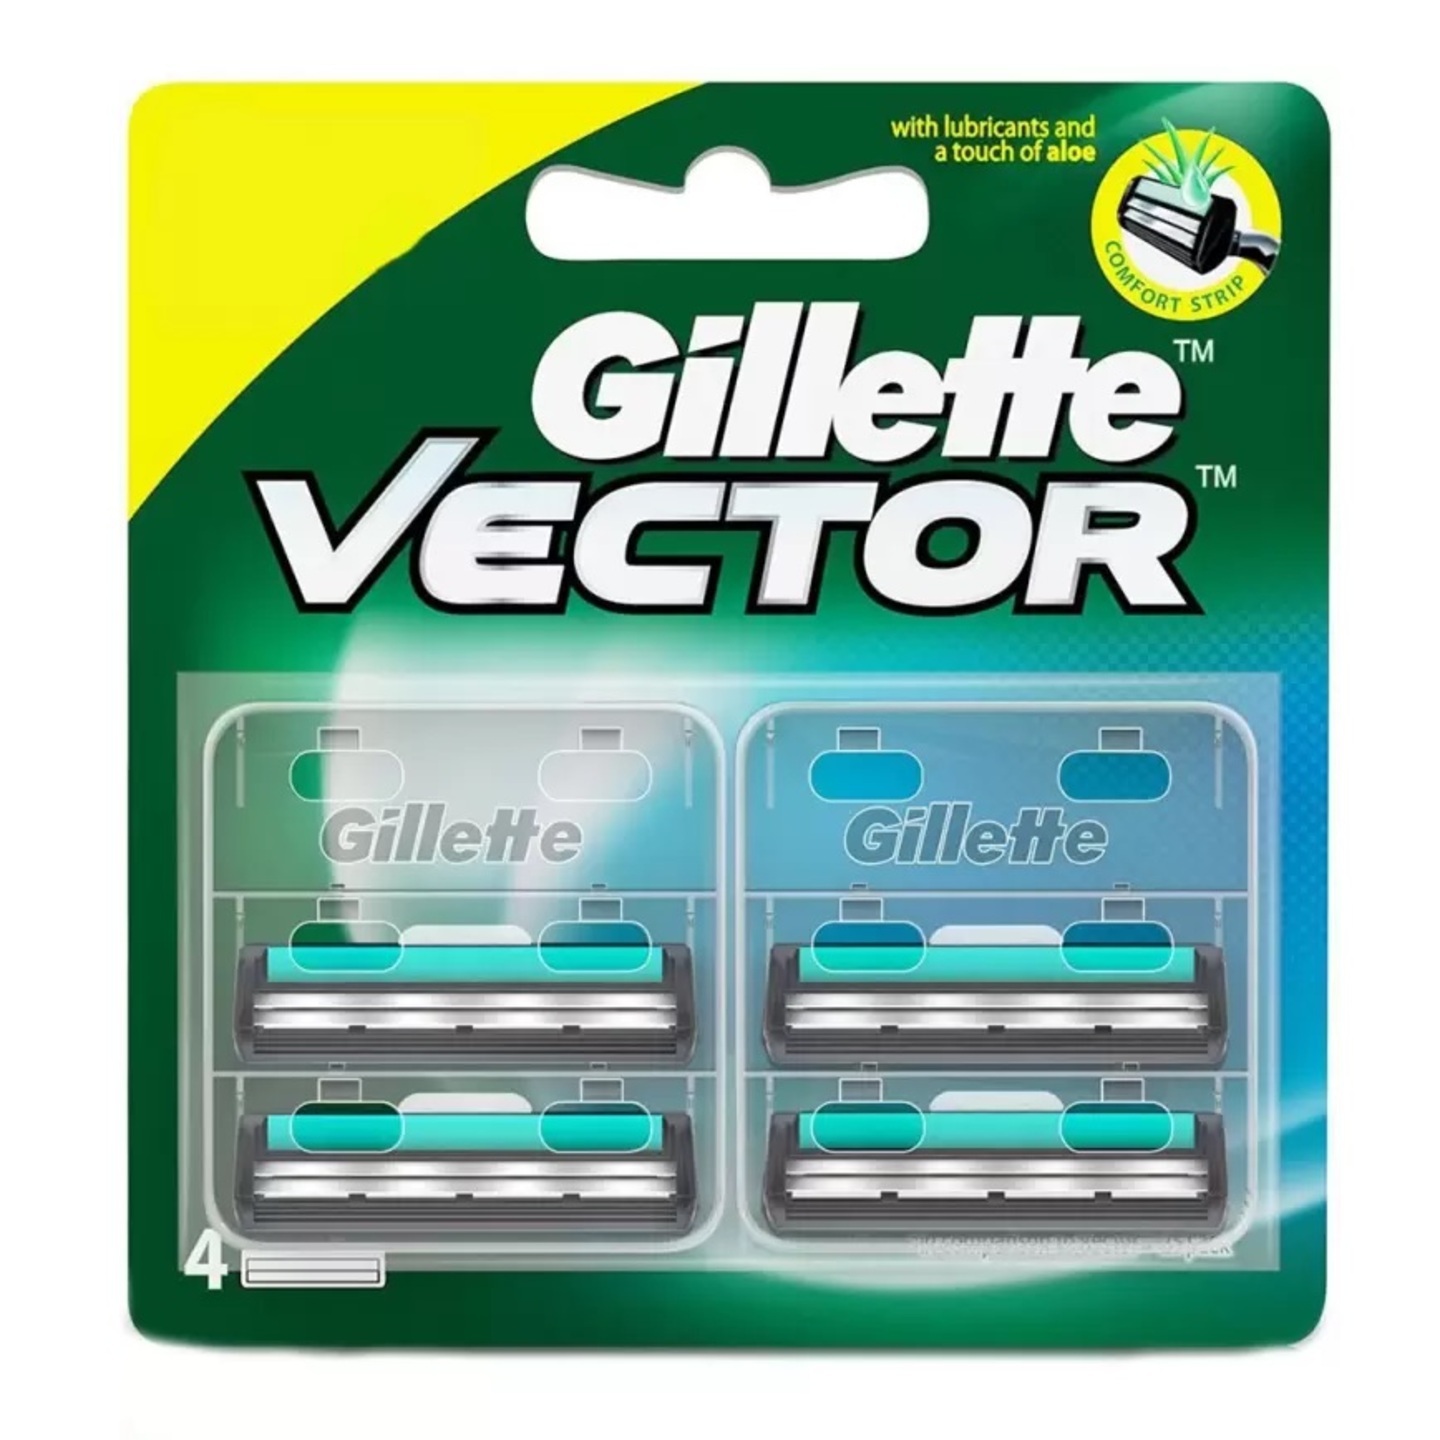 Gillette Vector Plus Manual Shaving Razor Blades (Cartridge) - Pack of 4